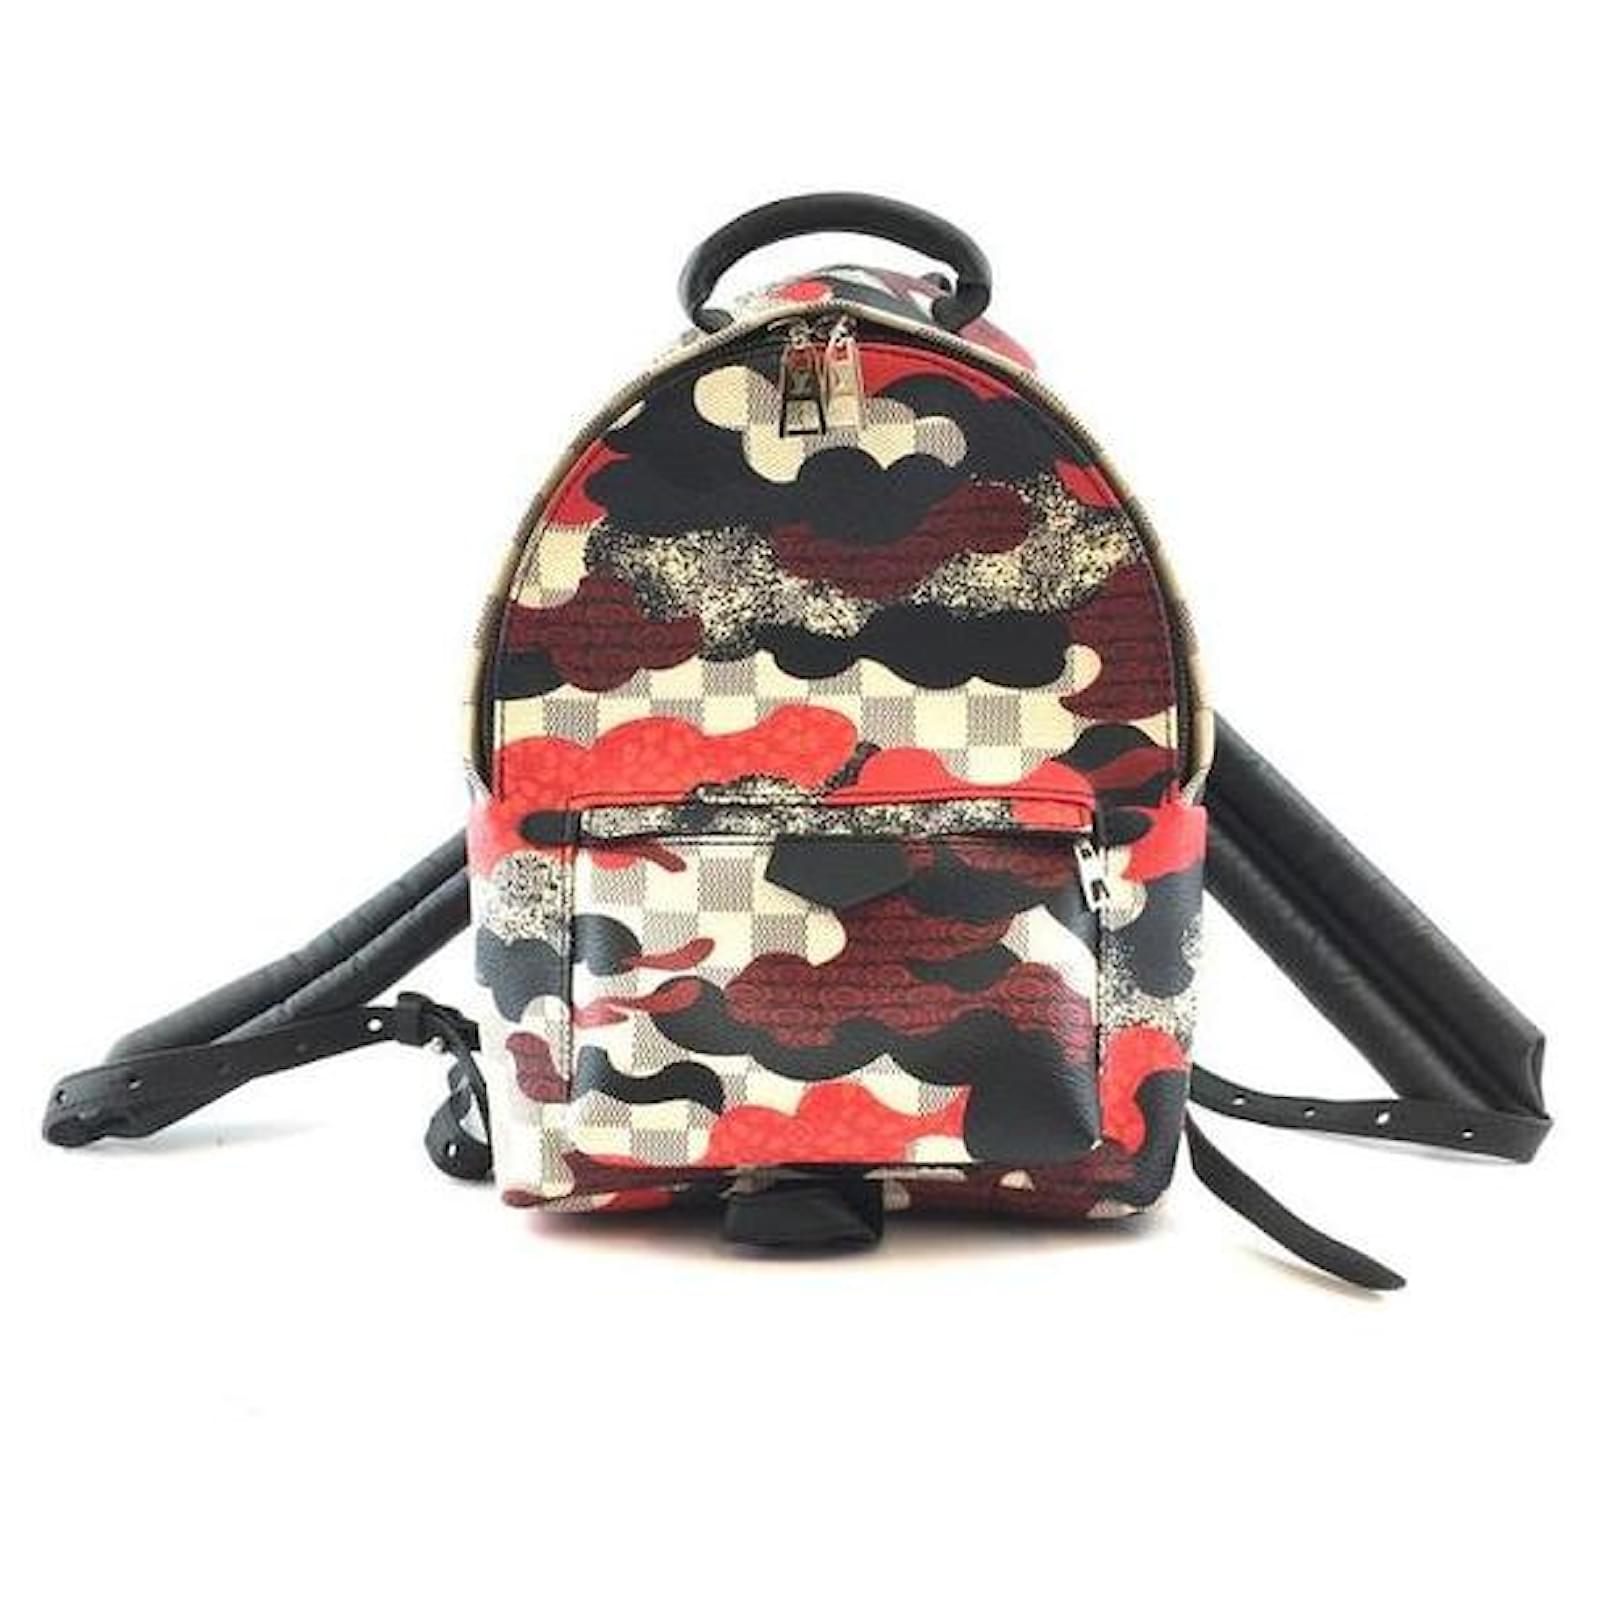 mini backpack purse louis vuittons wallet